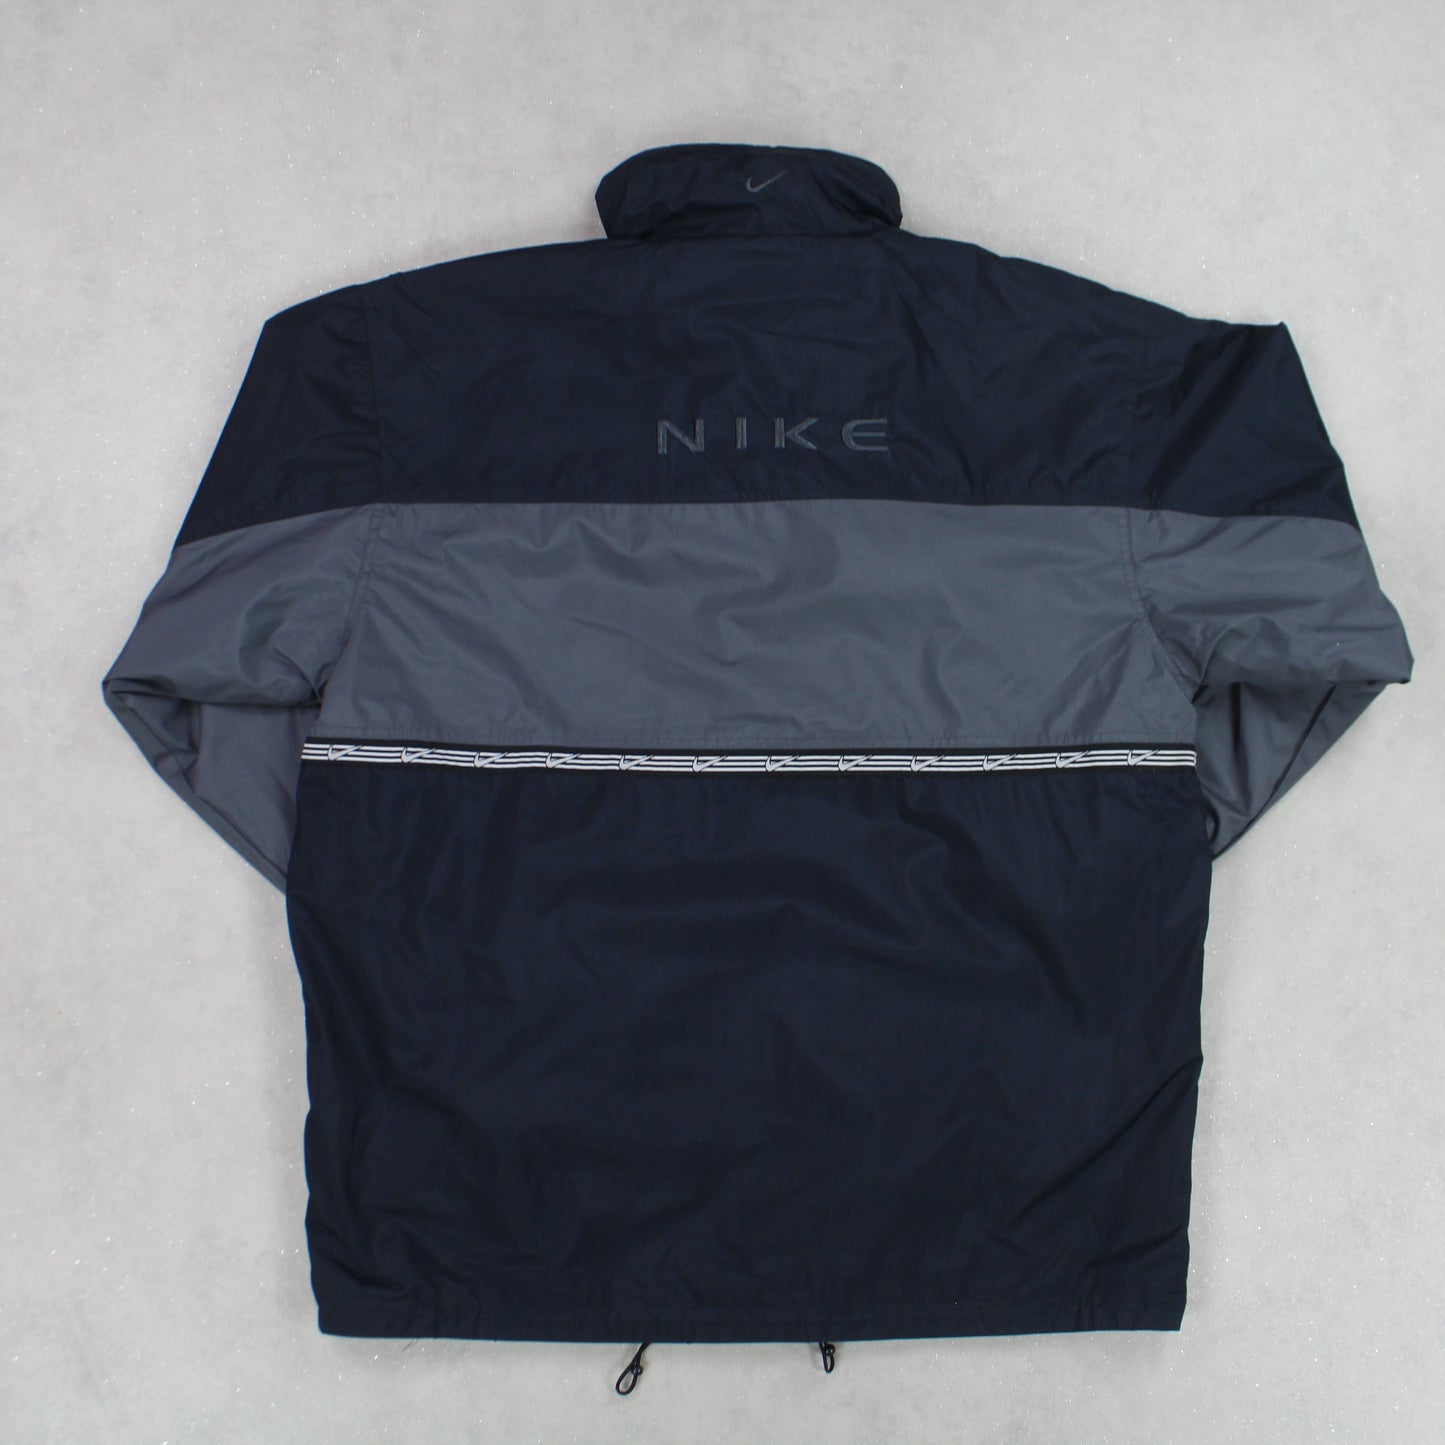 SUPER RARE 00s Vintage Nike Reversible Jacket Navy/Black - (XL)